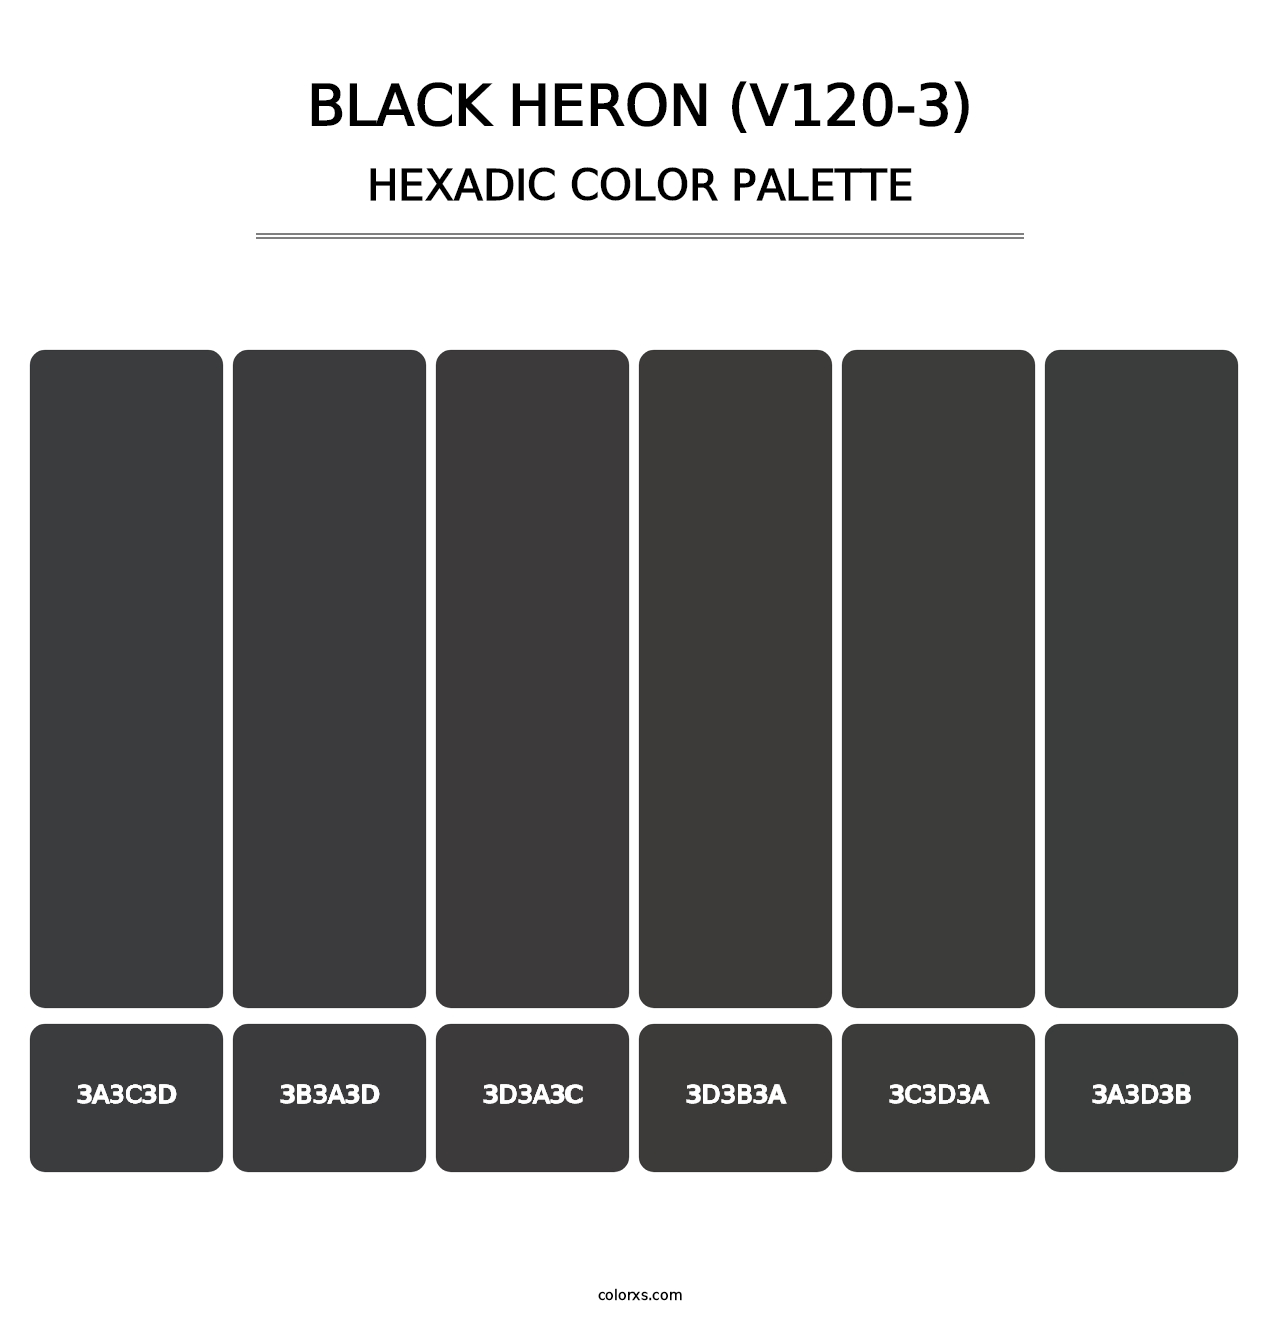 Black Heron (V120-3) - Hexadic Color Palette